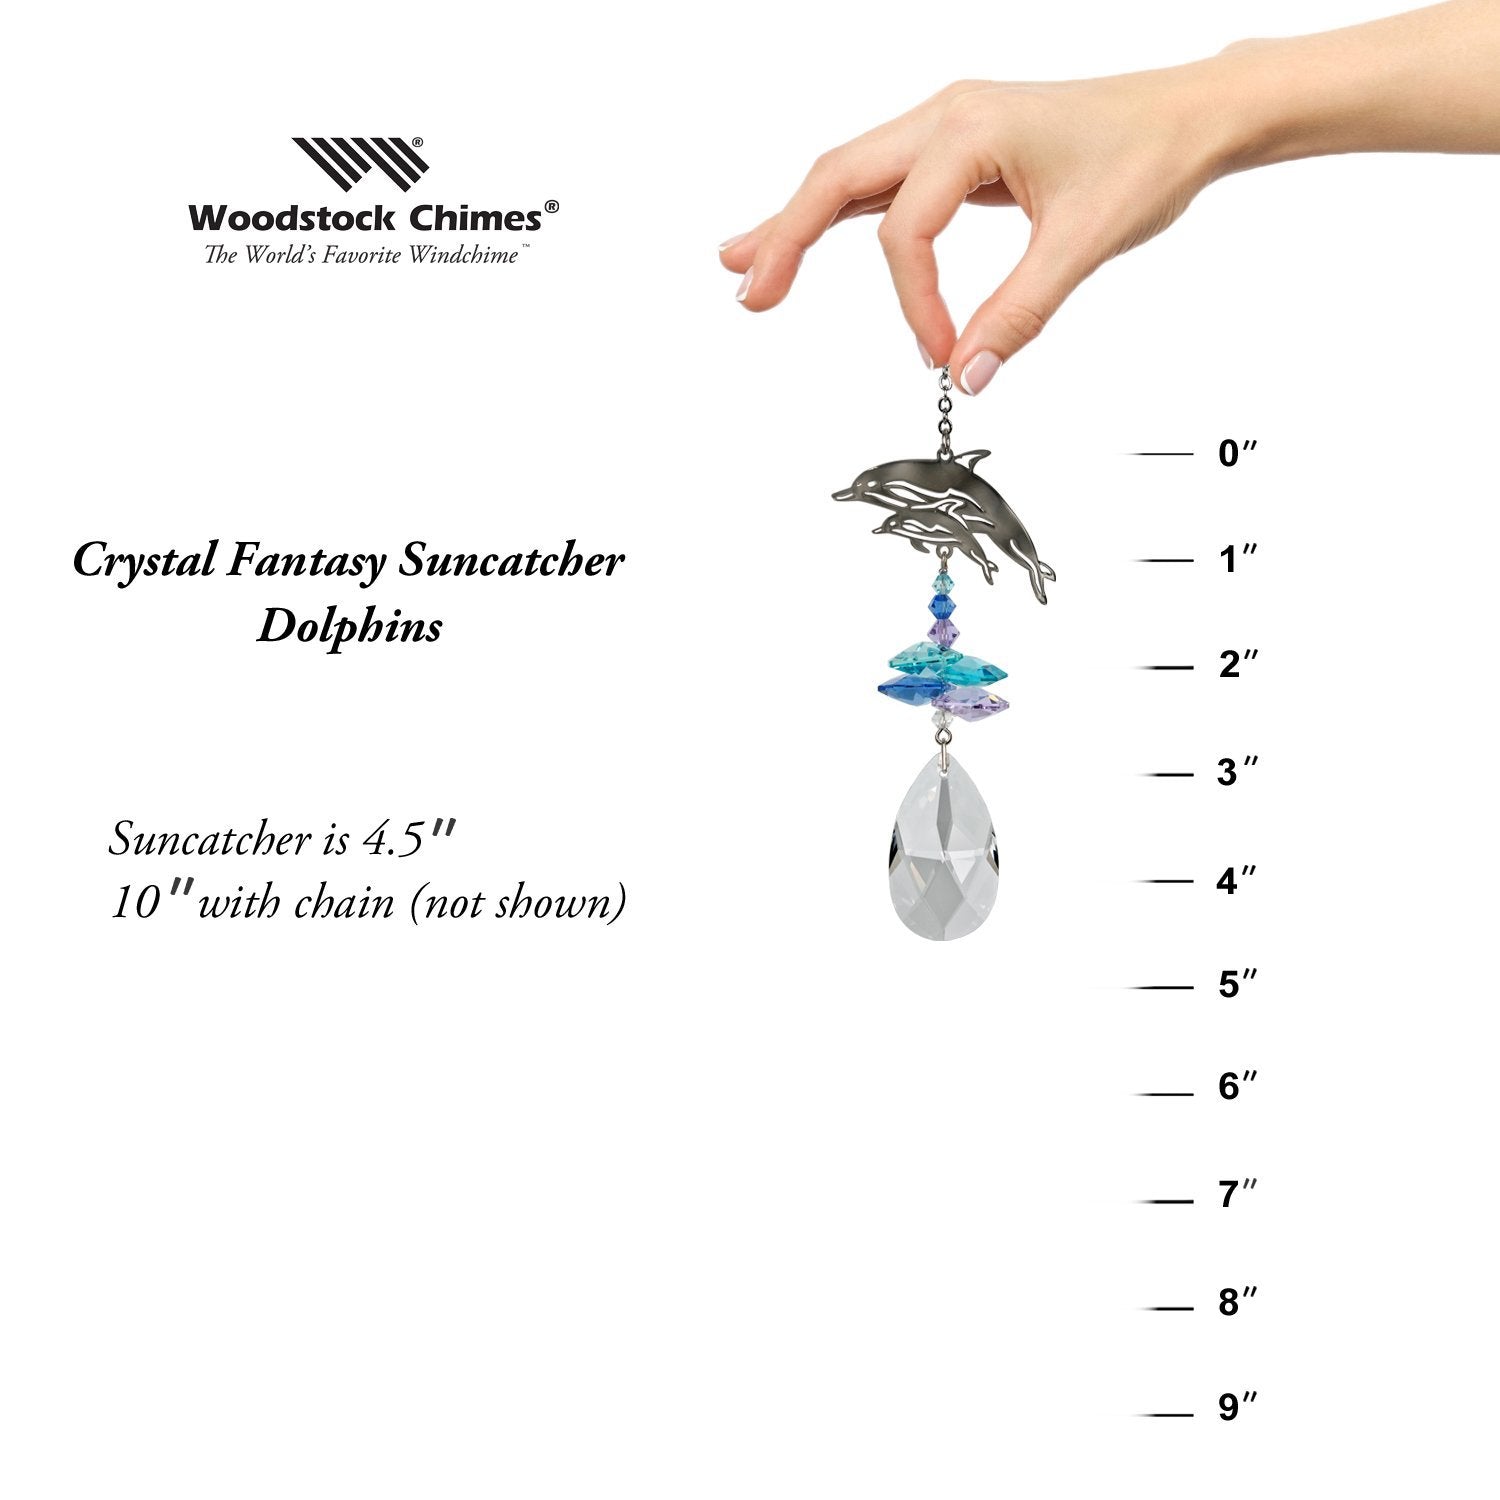 Crystal Fantasy Suncatcher - Dolphins proportion image